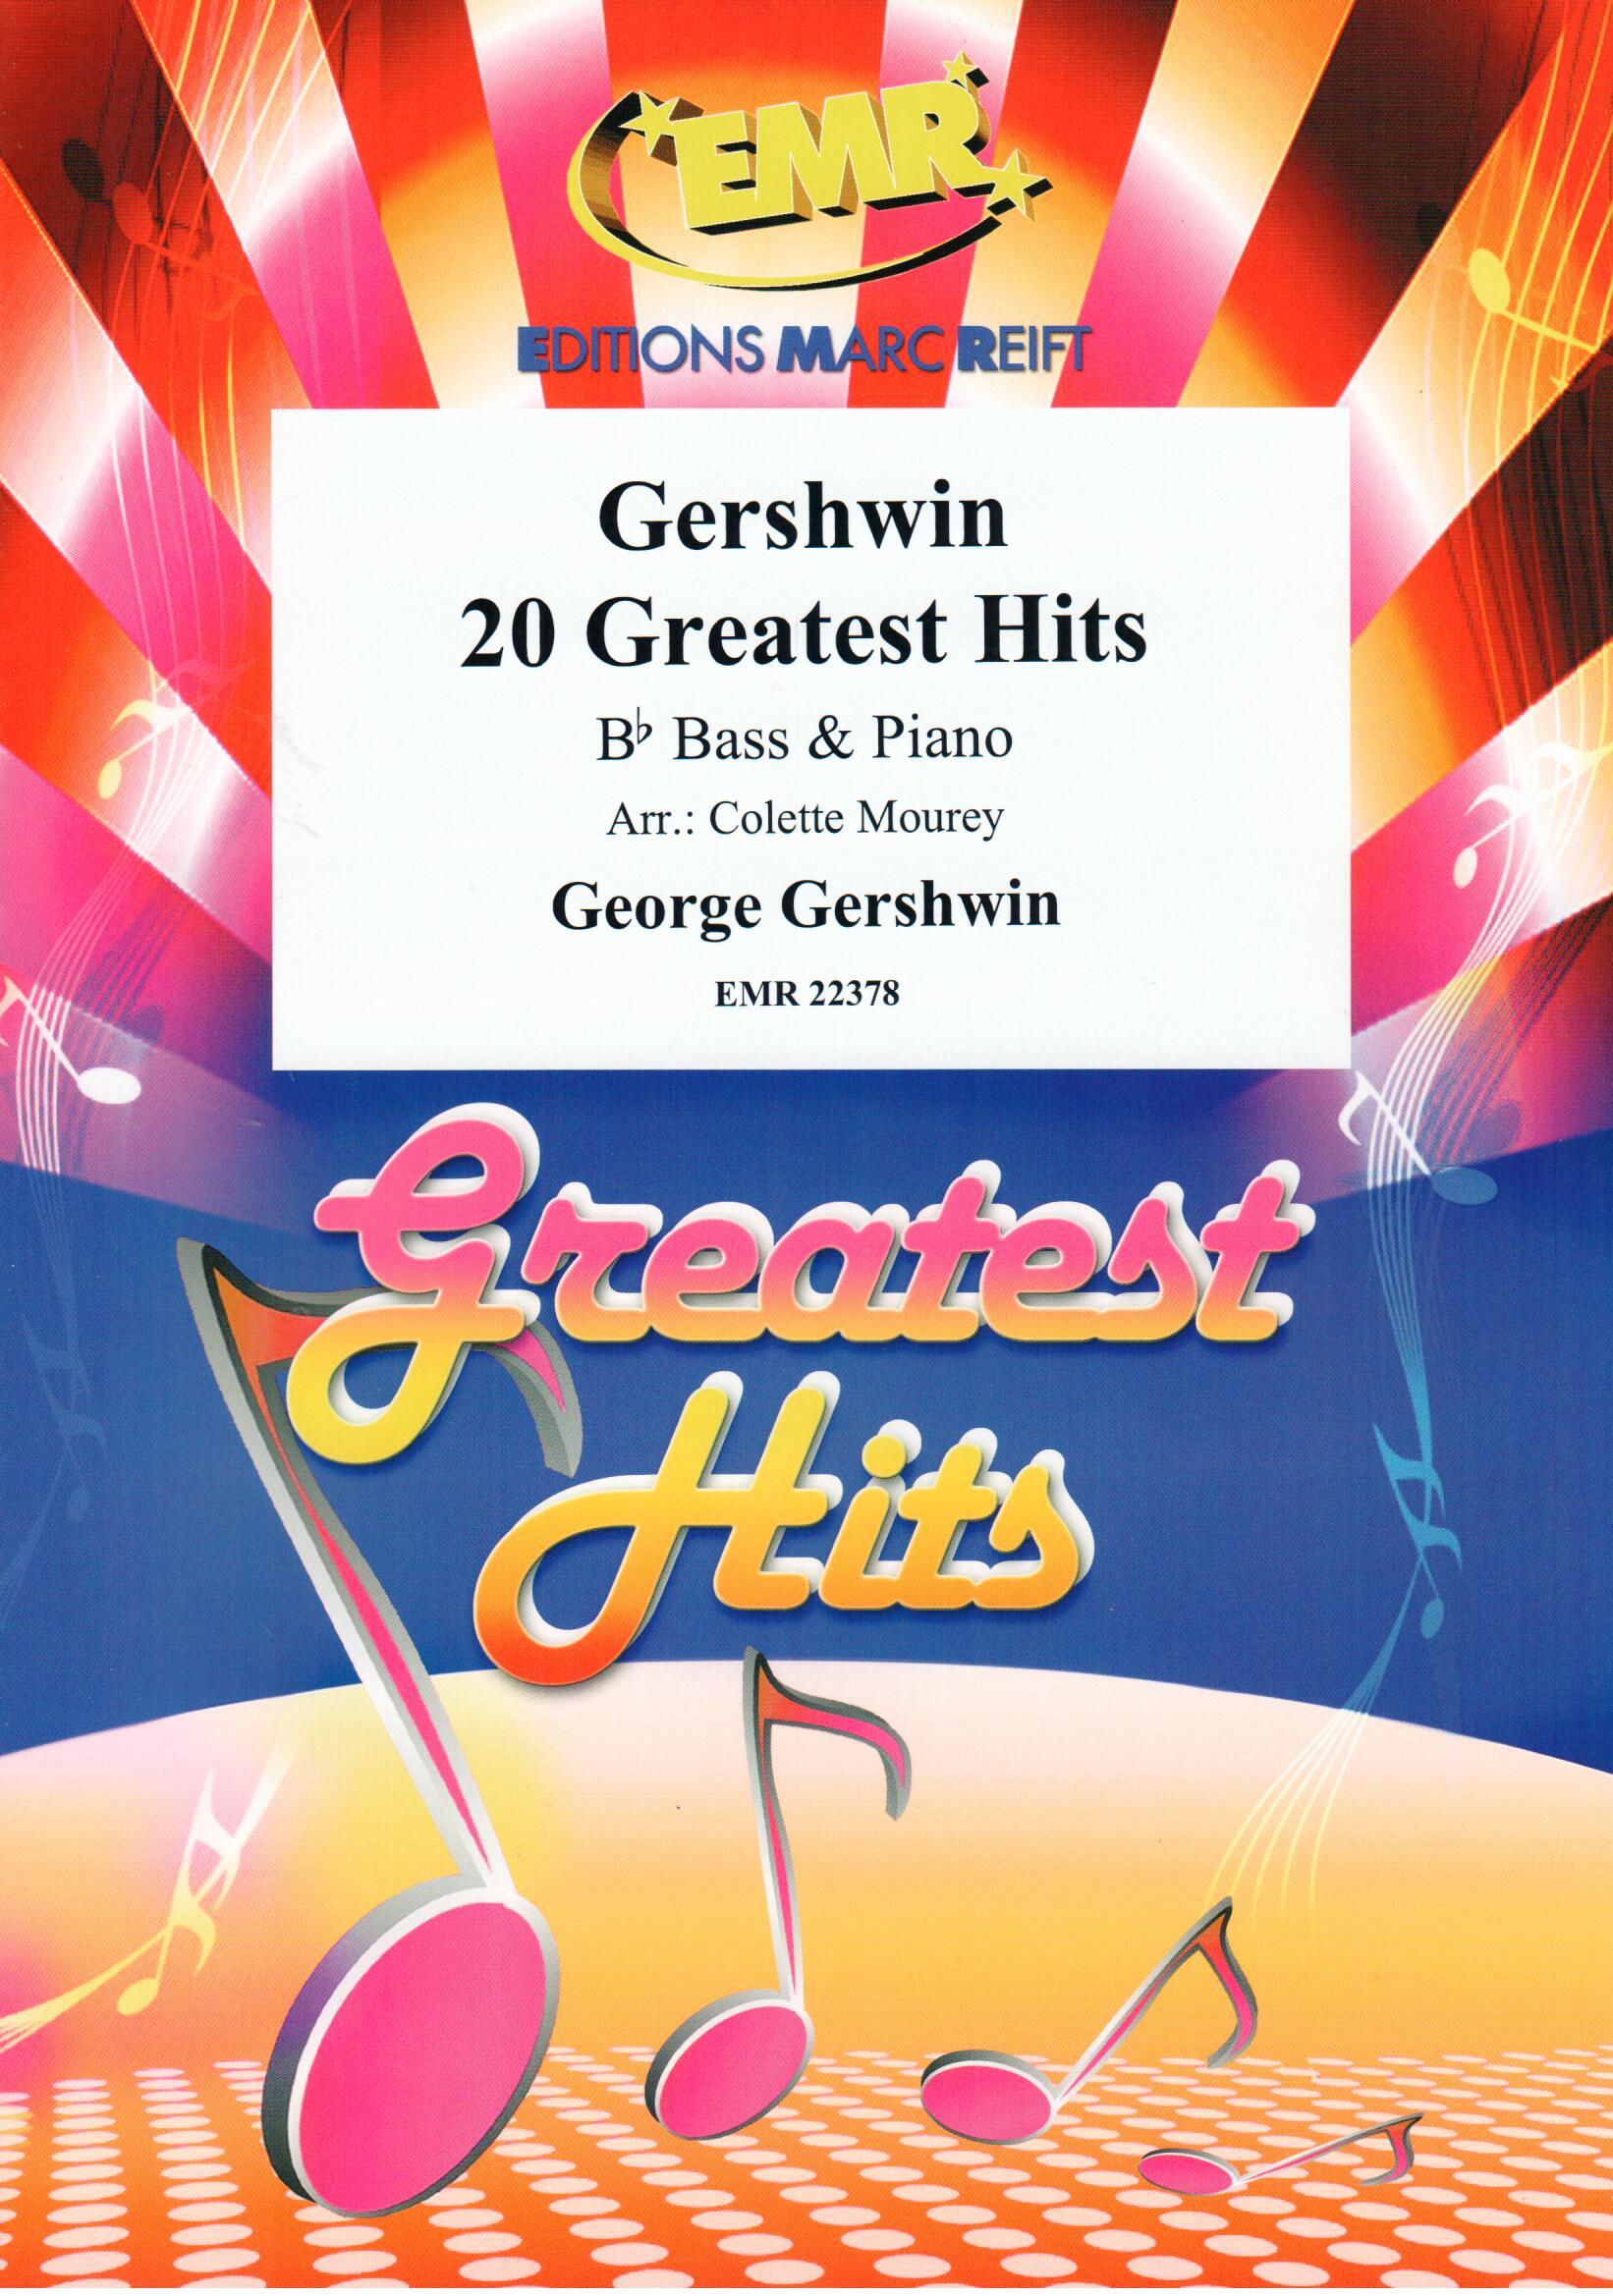 GERSHWIN 20 GREATEST HITS, SOLOS - E♭. Bass